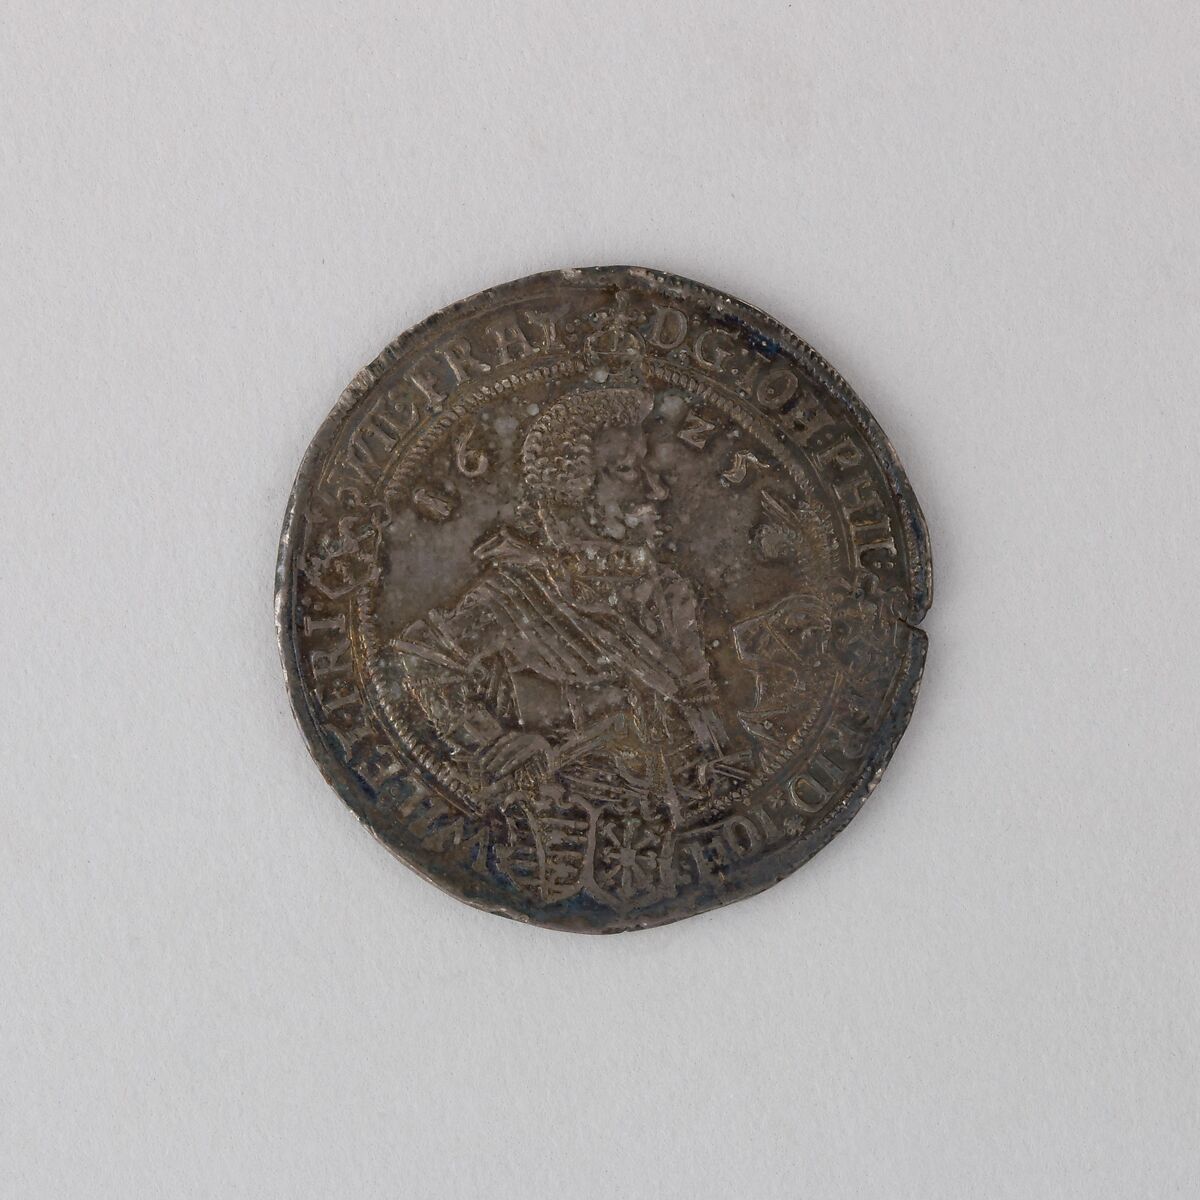 Coin (Thaler) Showing John Philip, Duke of Saxony, Silver, German 